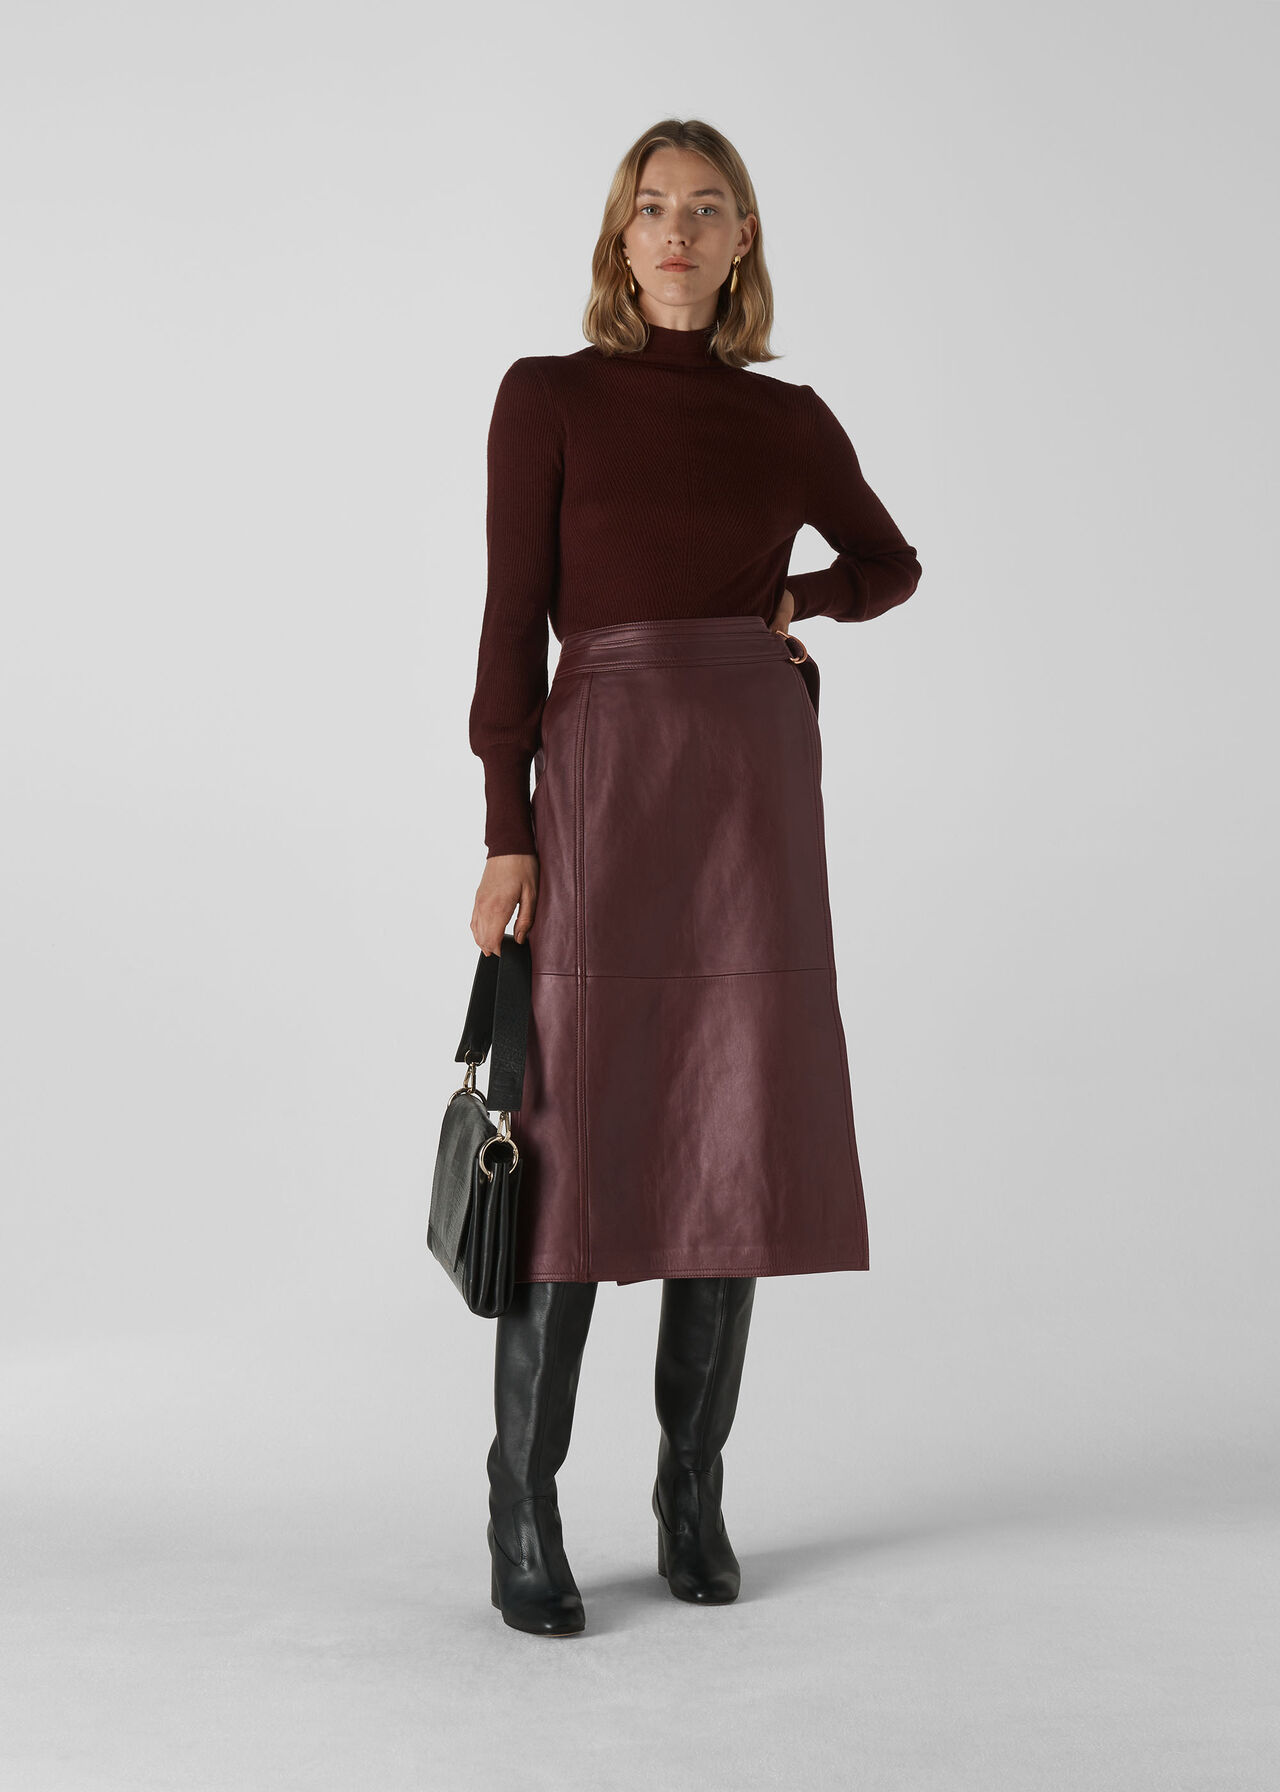 How To Wear Burgundy Leather Skirt | canoeracing.org.uk